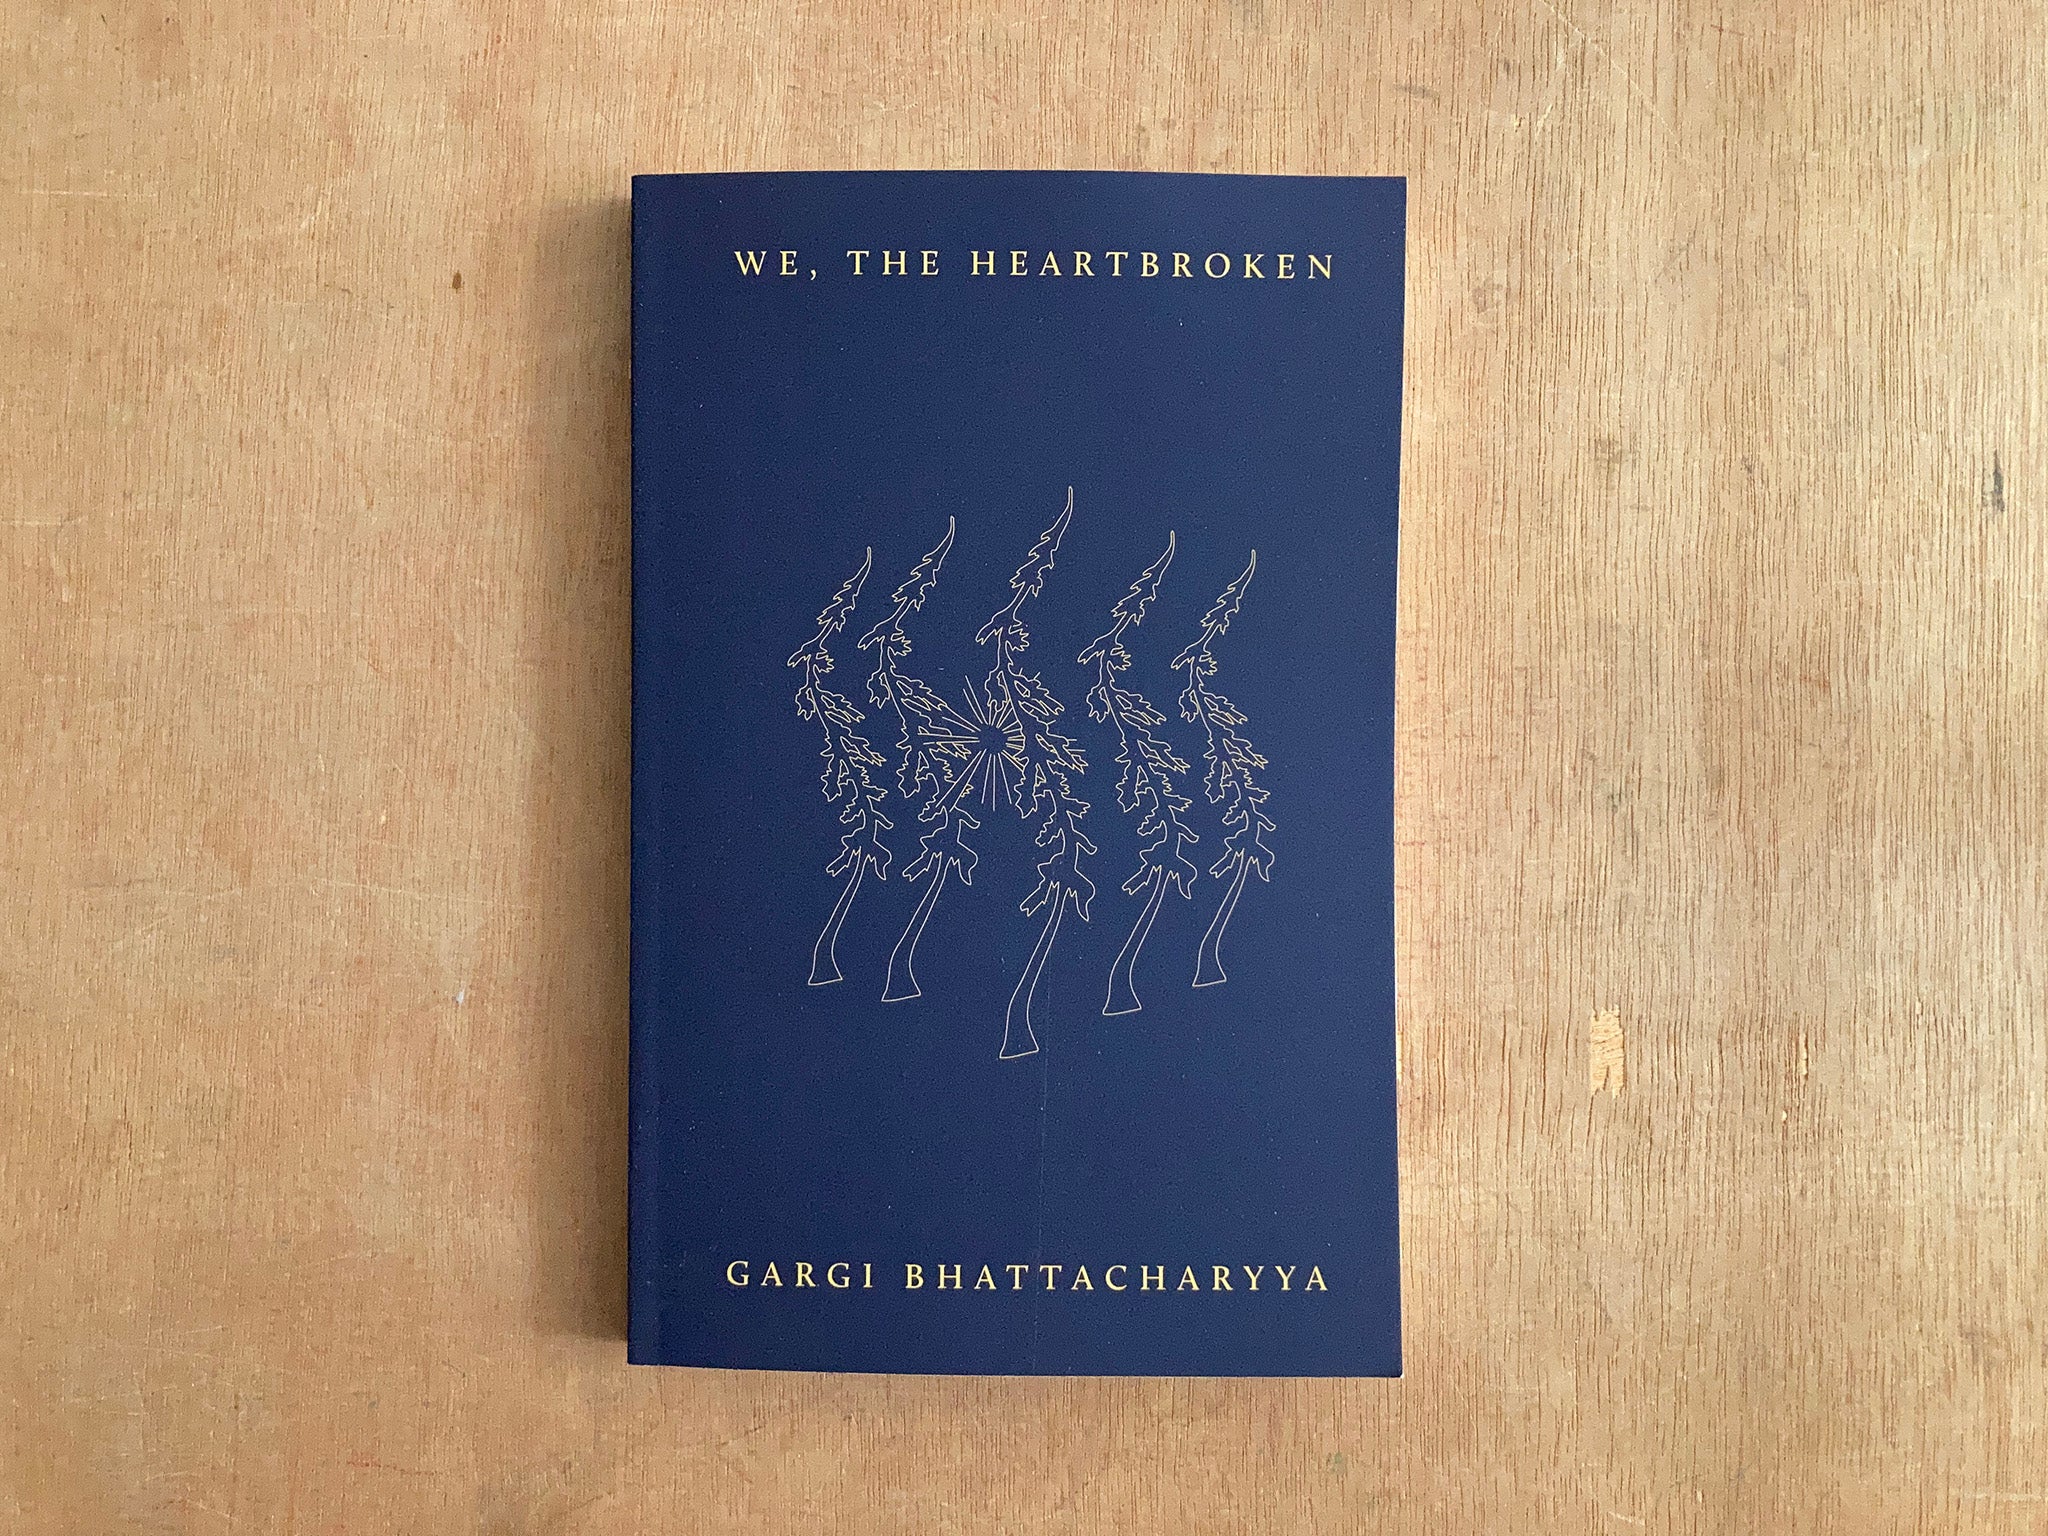 WE, THE HEARTBROKEN by Gargi Bhattacharyya